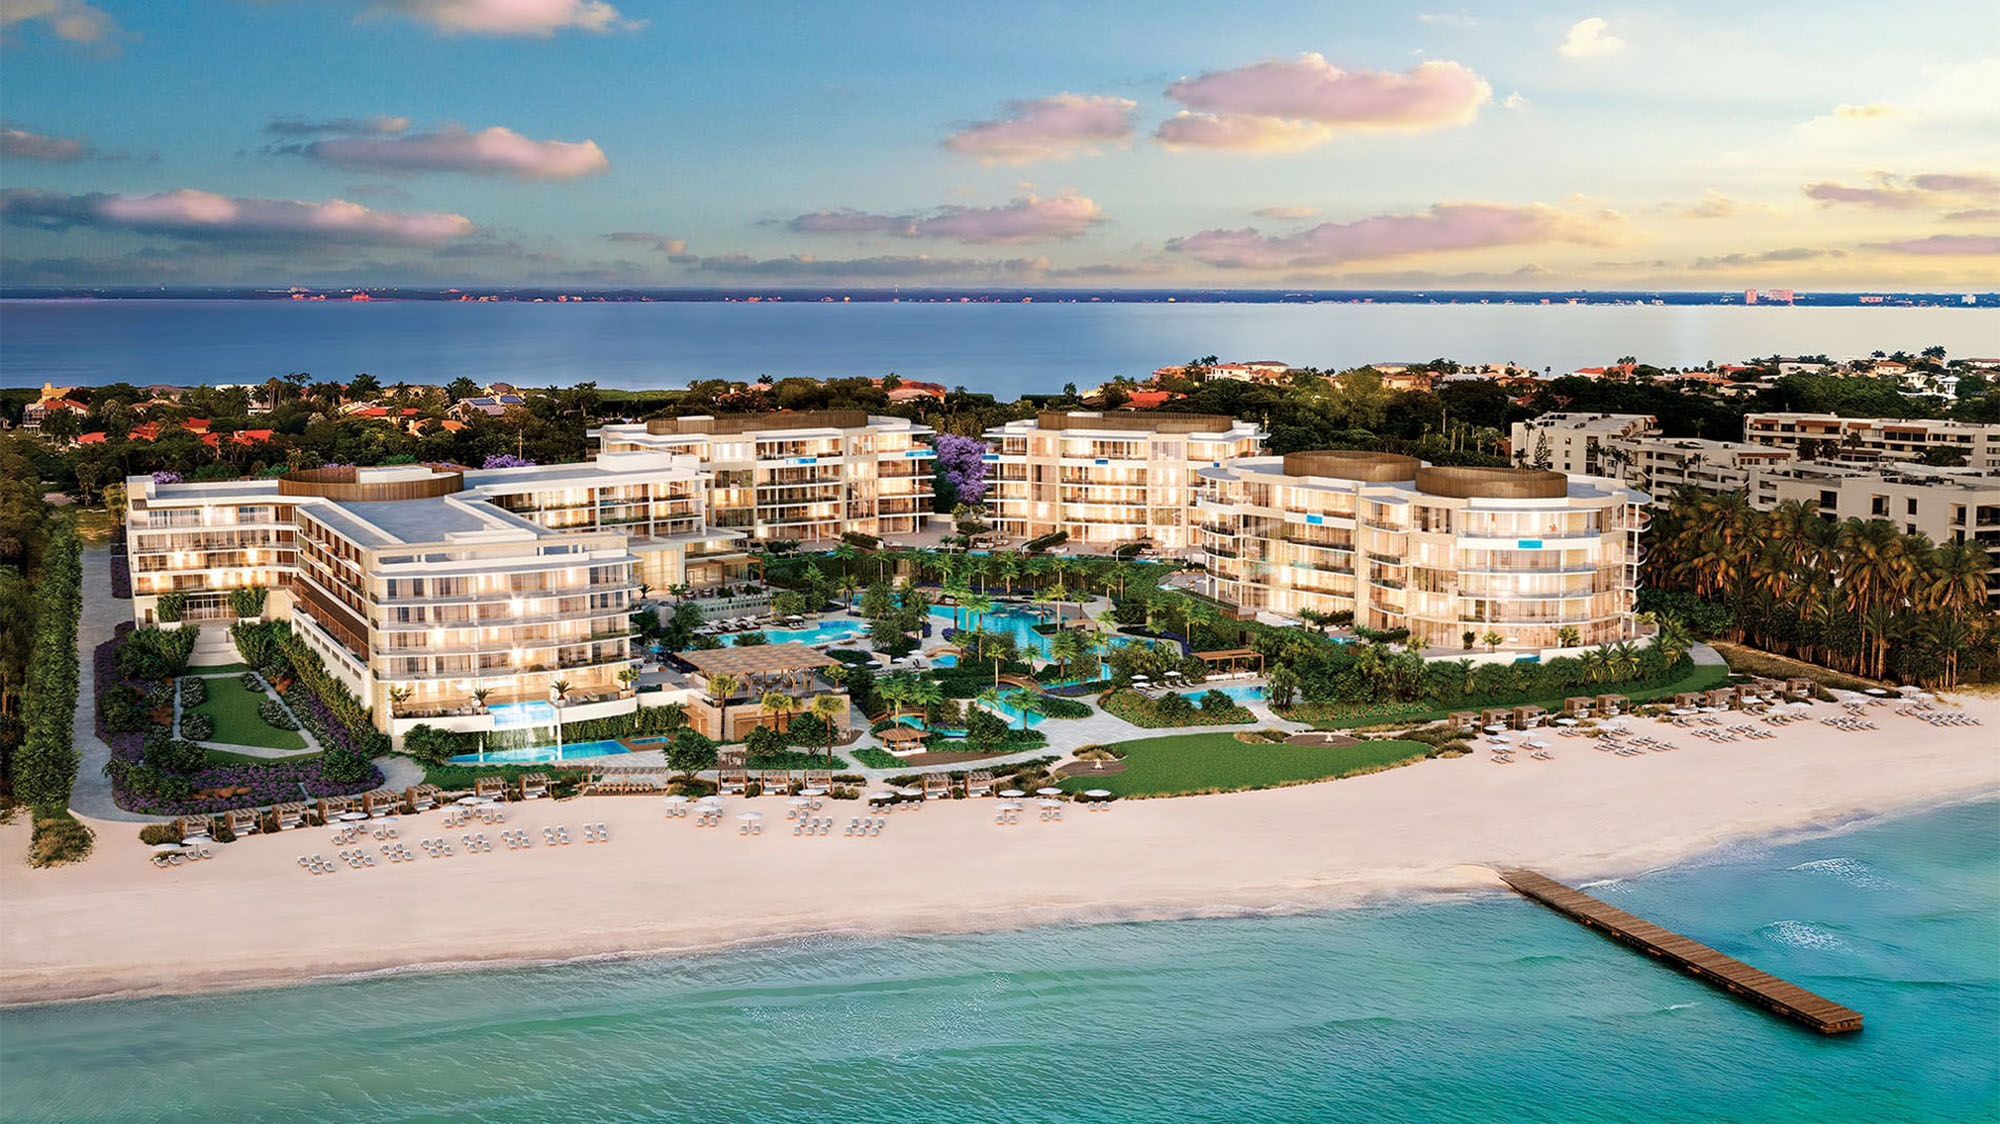 St. Regis resort on Florida%27s Gulf Coast expected